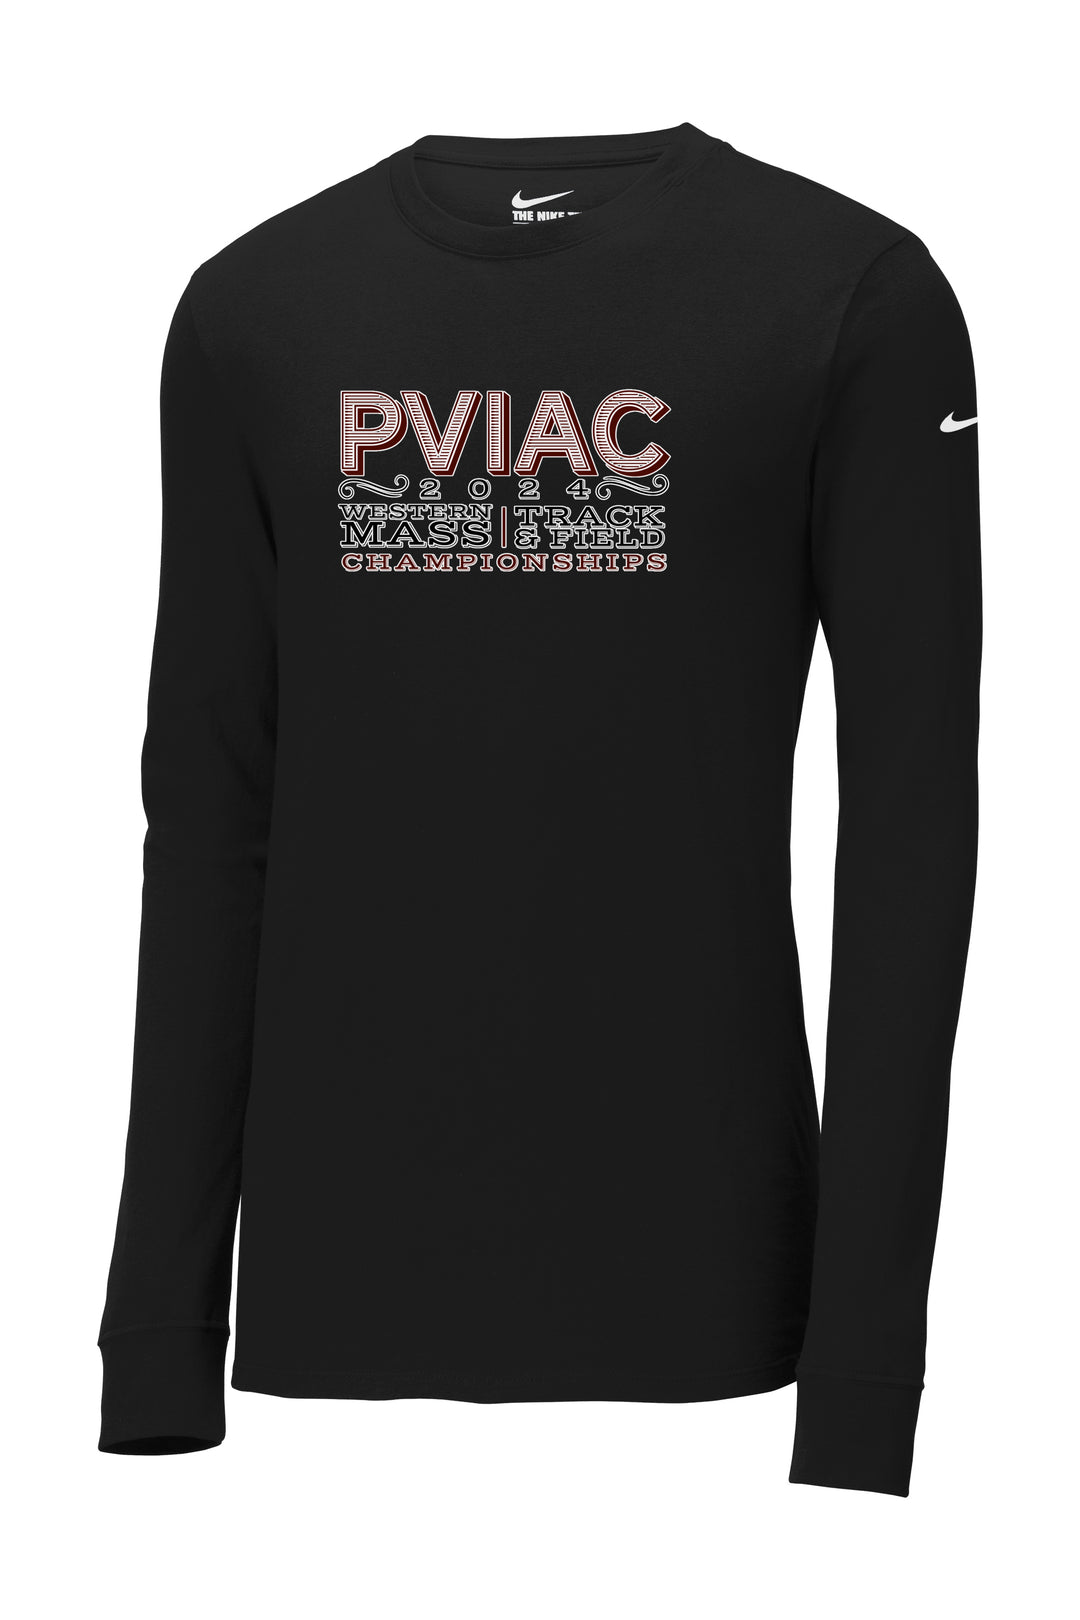 PVIAC Track & Field Championship- Nike Dri FIT Cotton/Poly Long Sleeve Tee (NKBQ5230)